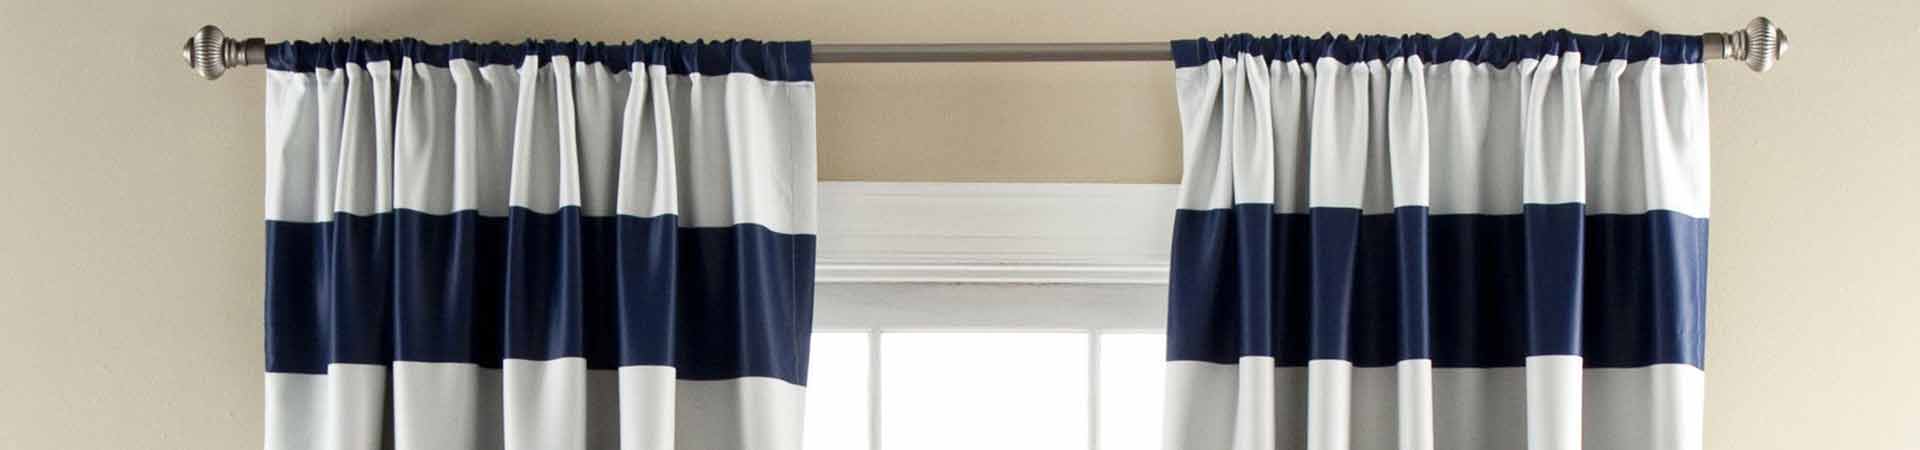 Curtain Installation Service